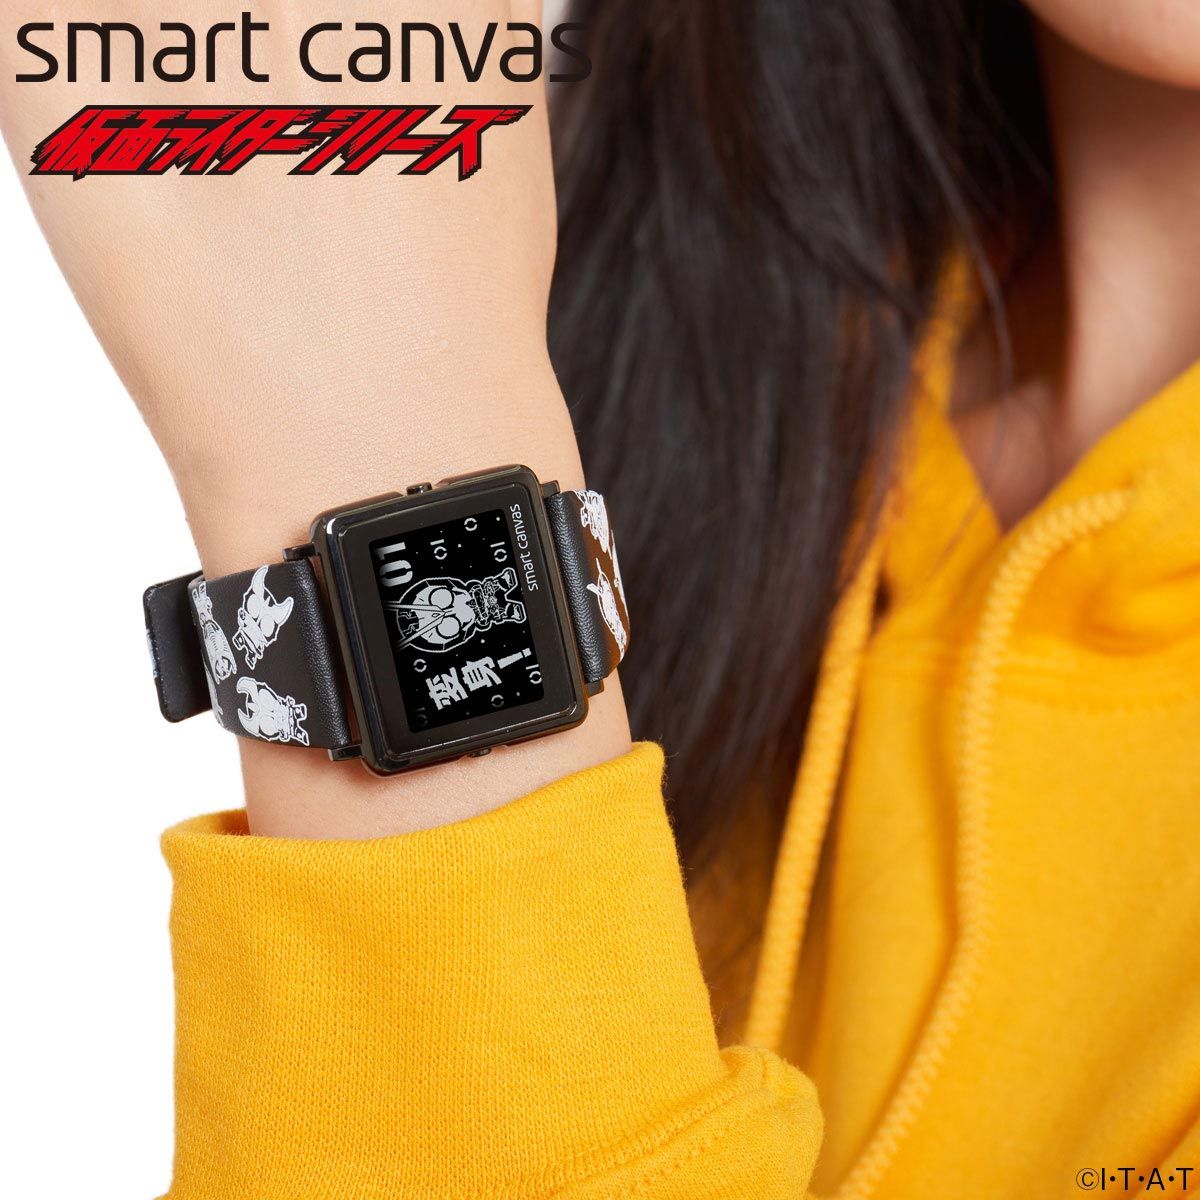 Zero One EPSON Smart Canvas Watch